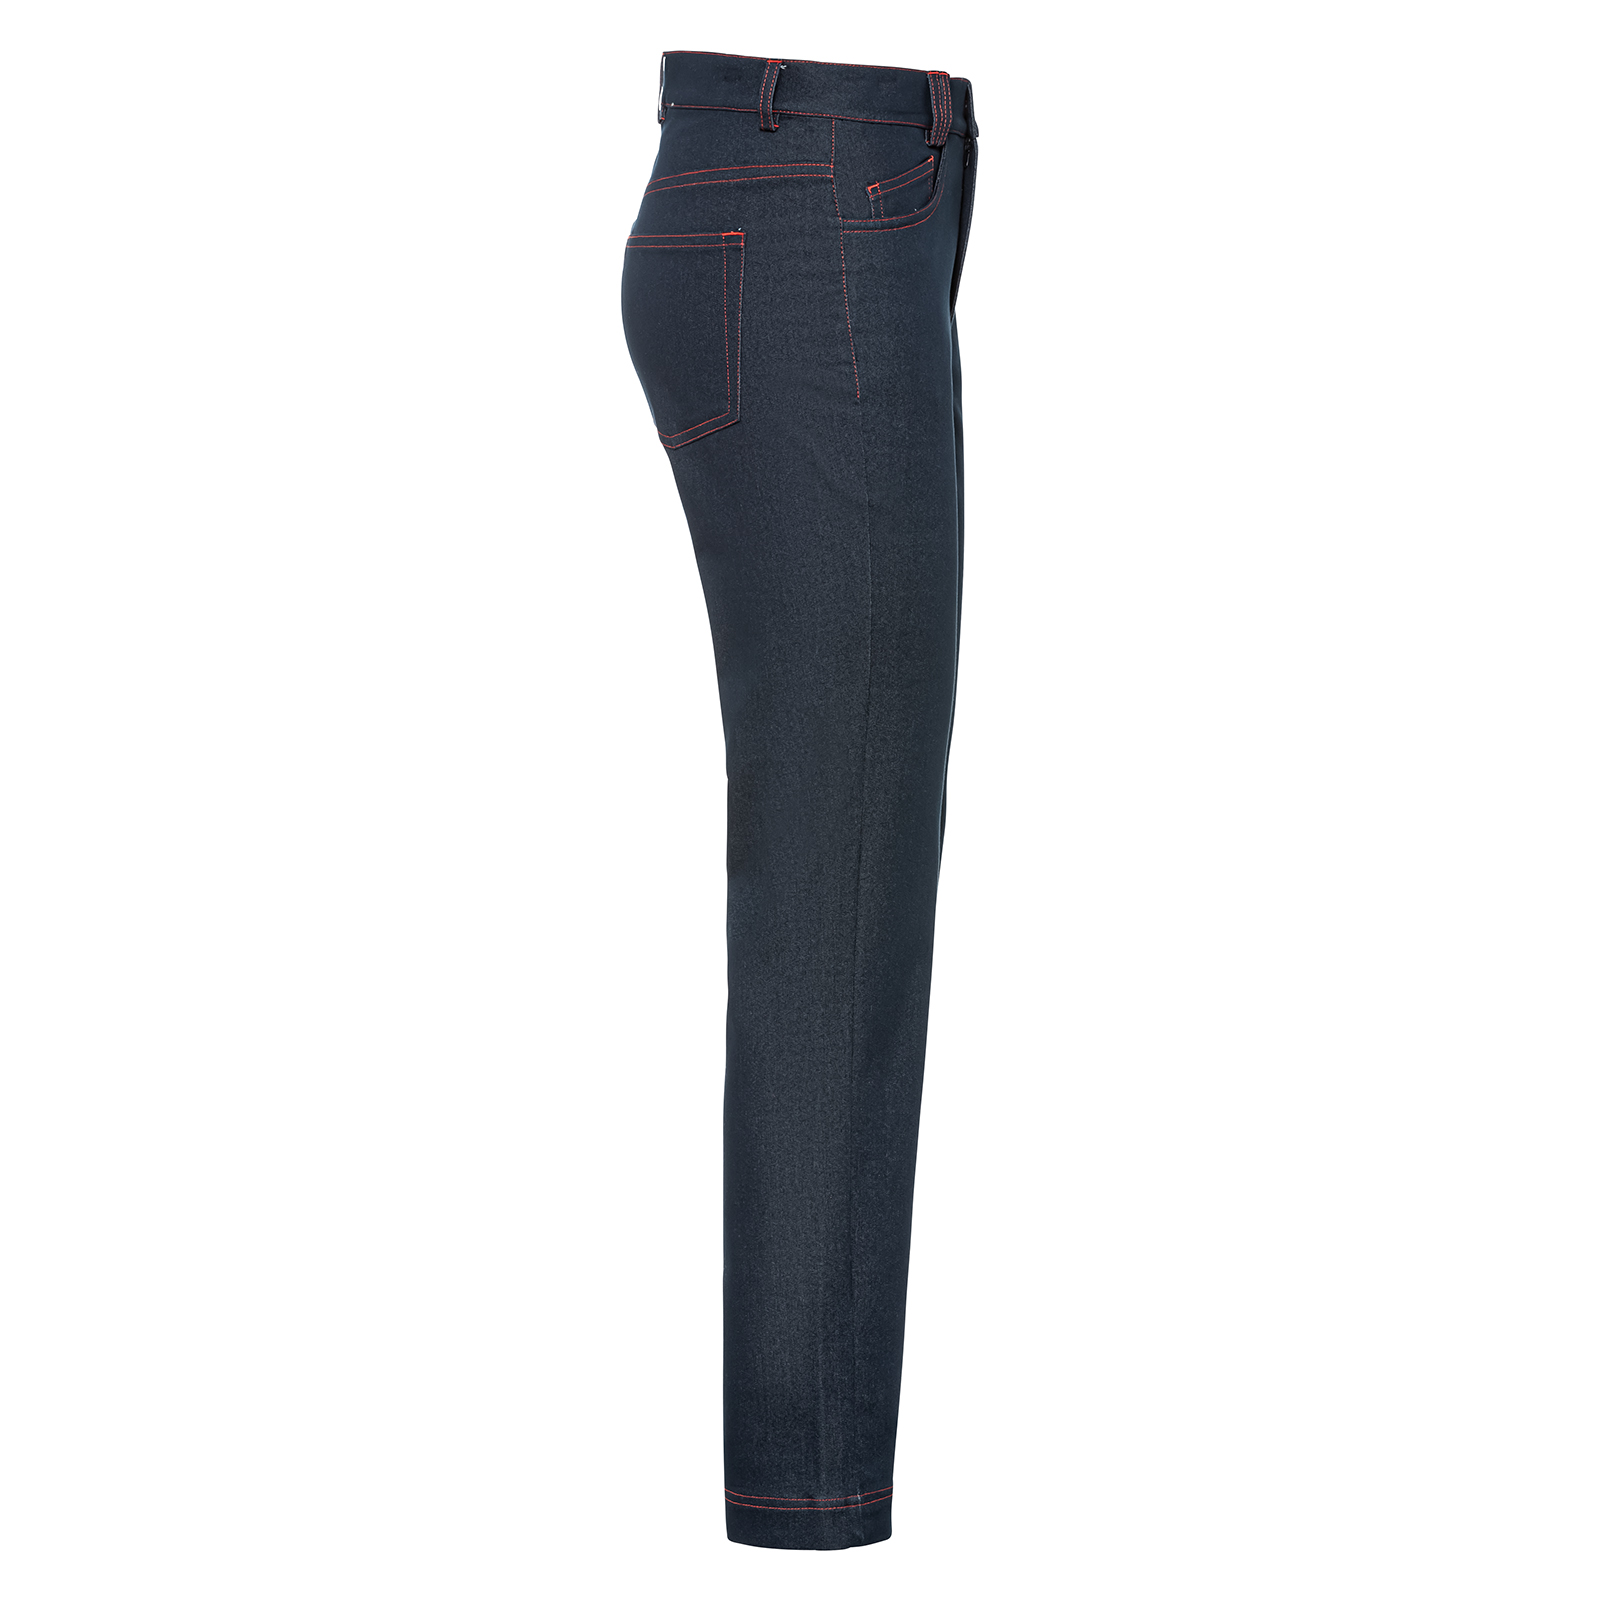 Moderne Damen Golf Hose in Jeans Optik mit Stretch